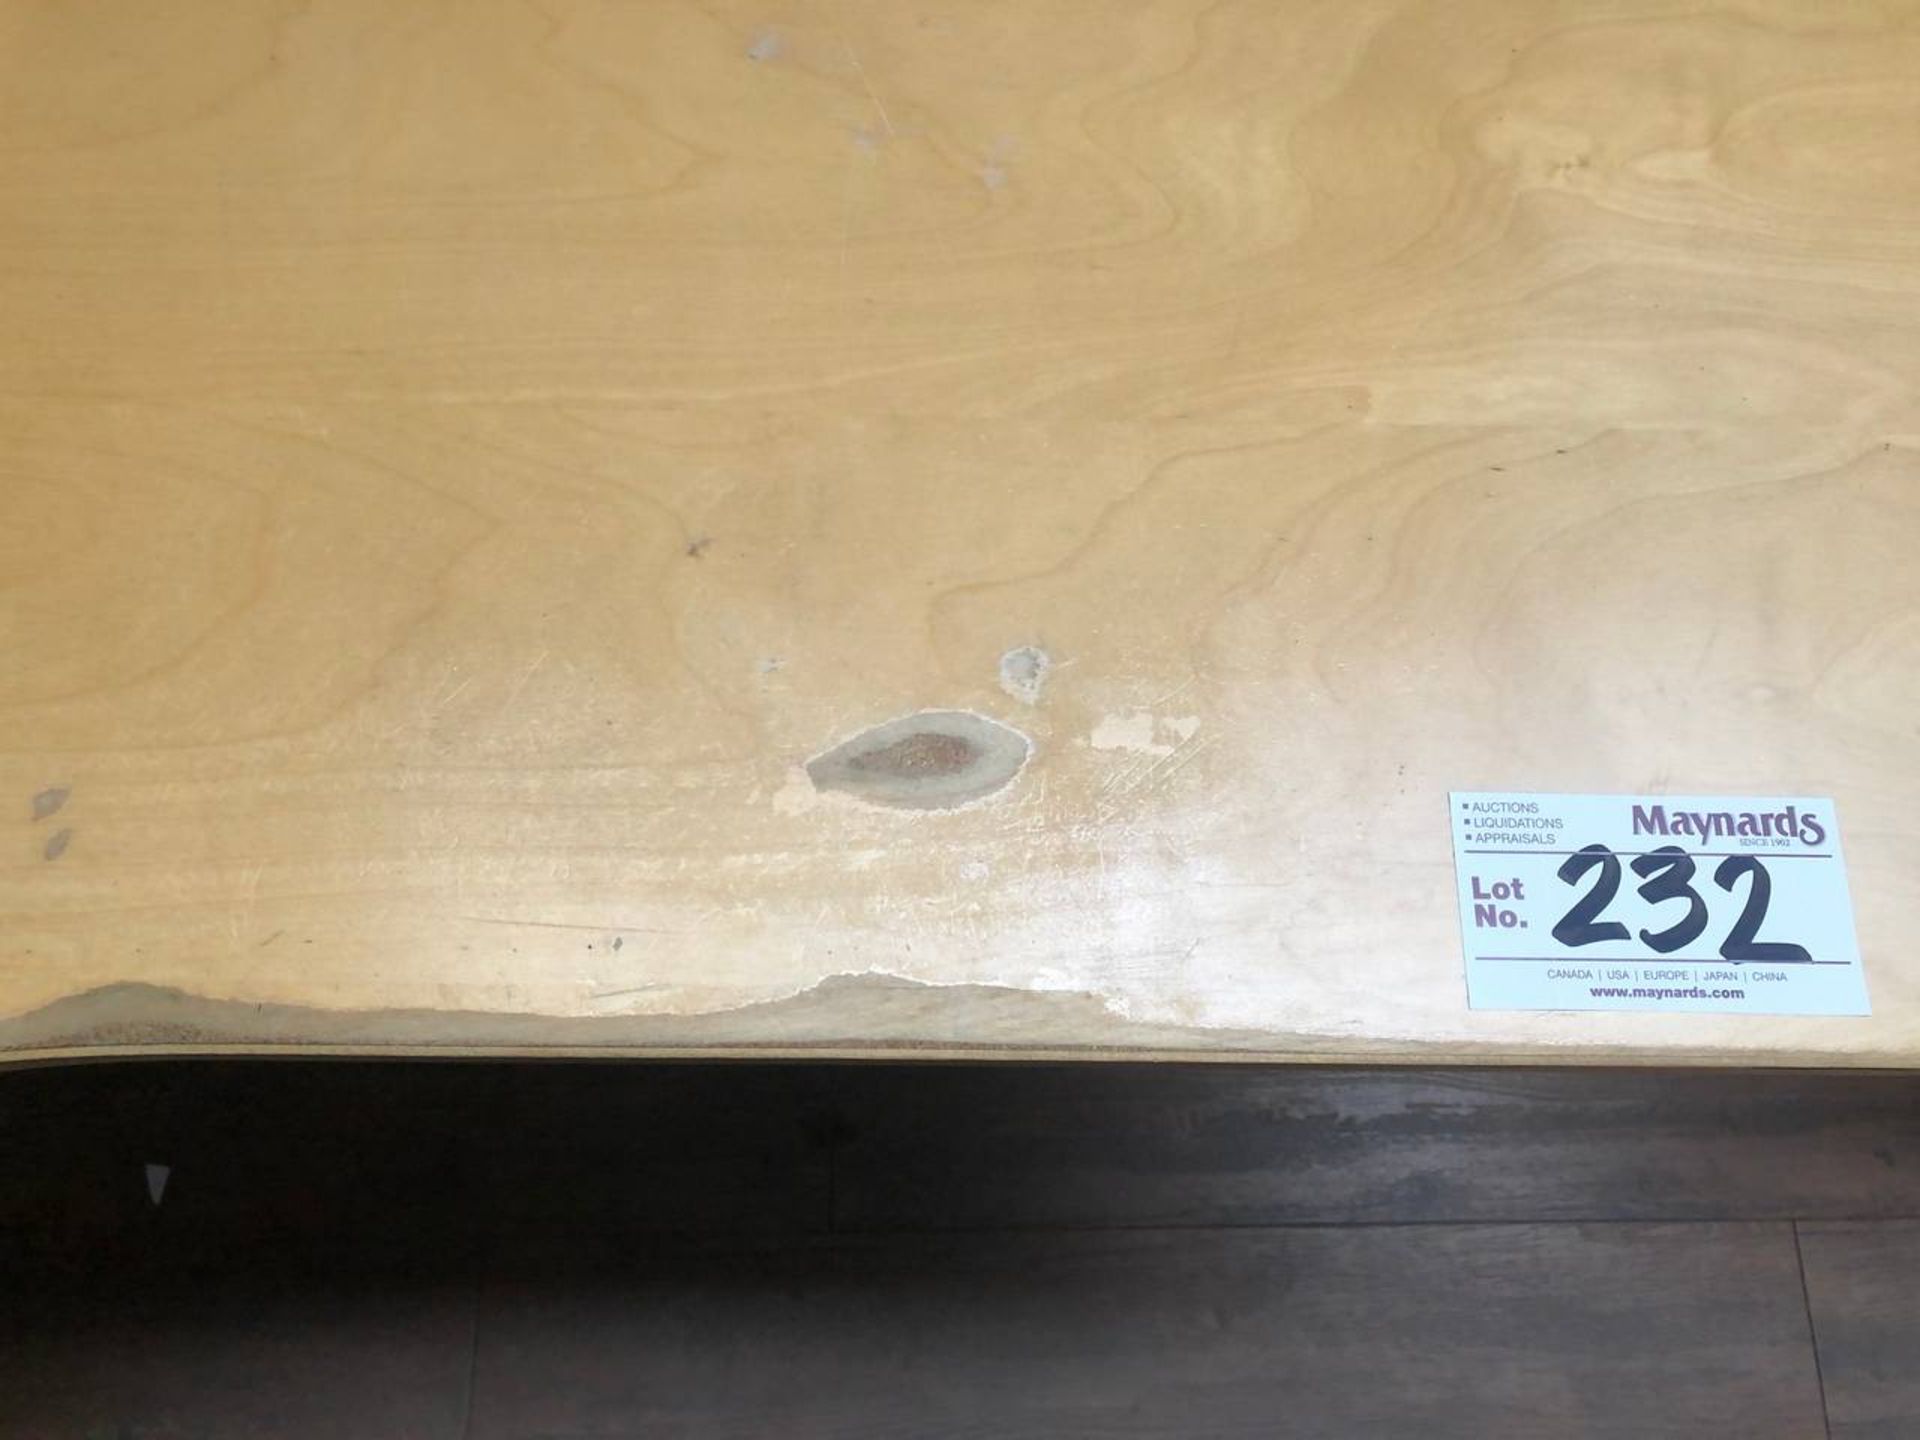 Ikea corner maple desk, - Image 3 of 4